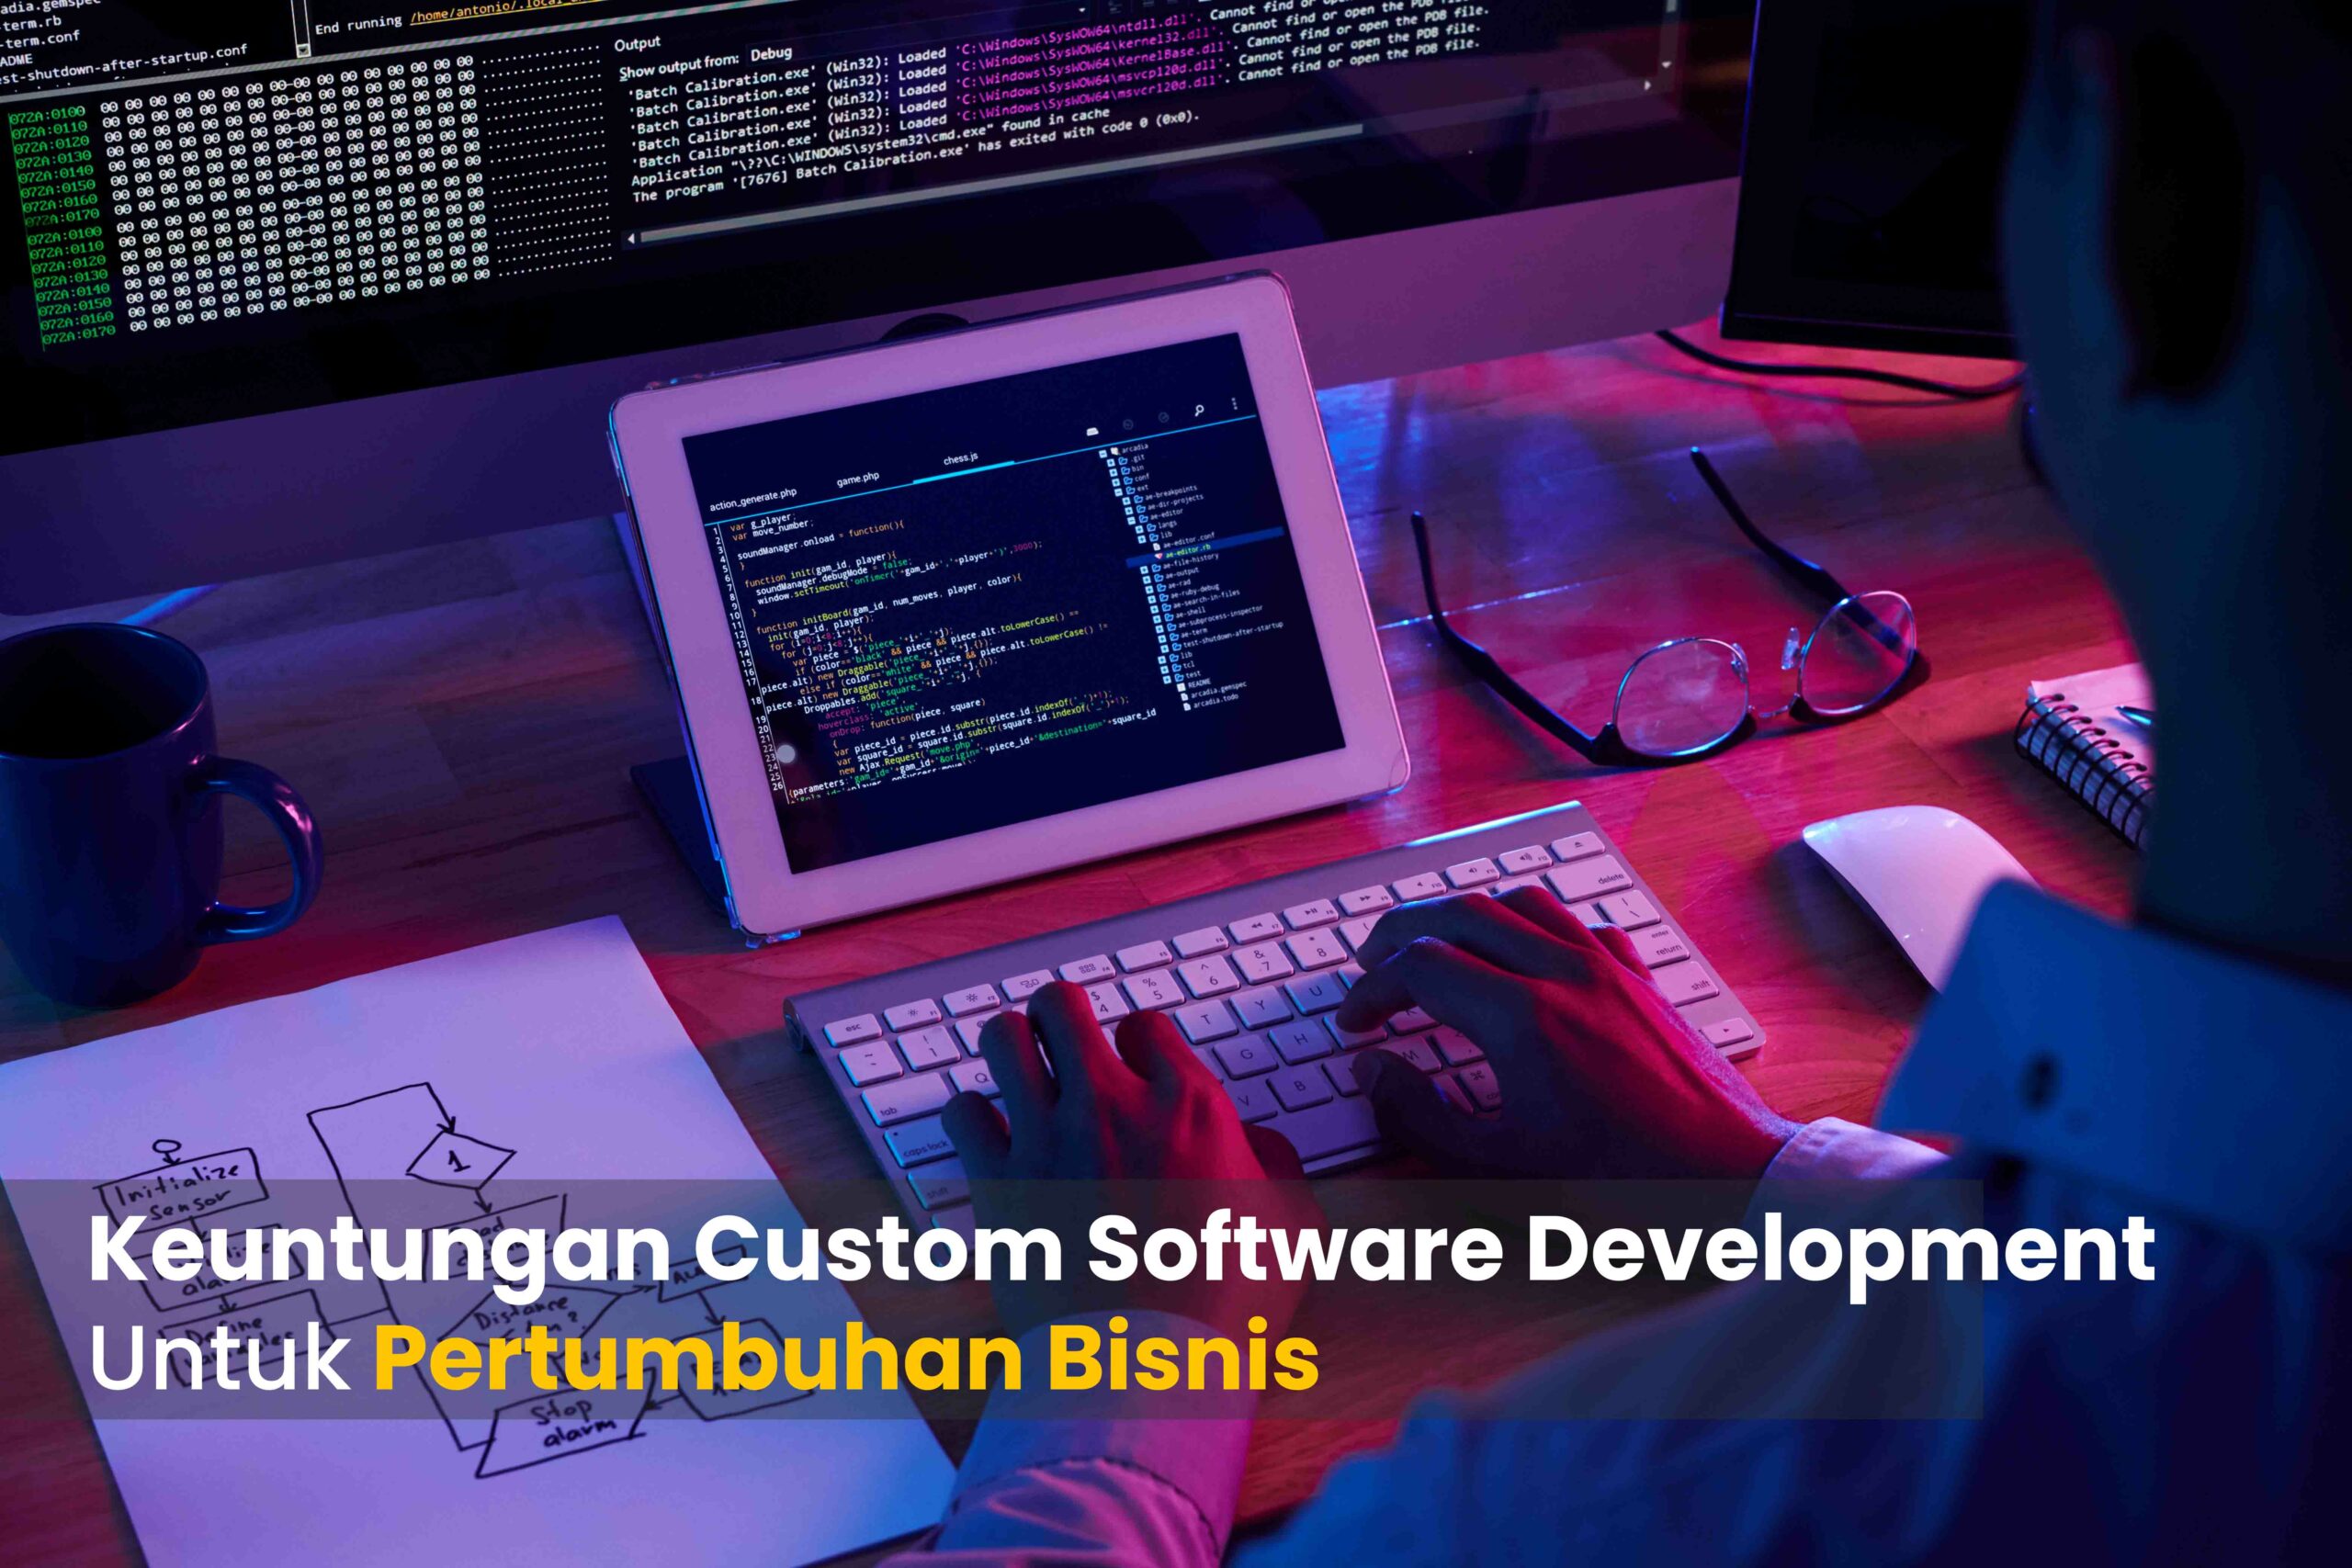 Custom Software Development Illustration